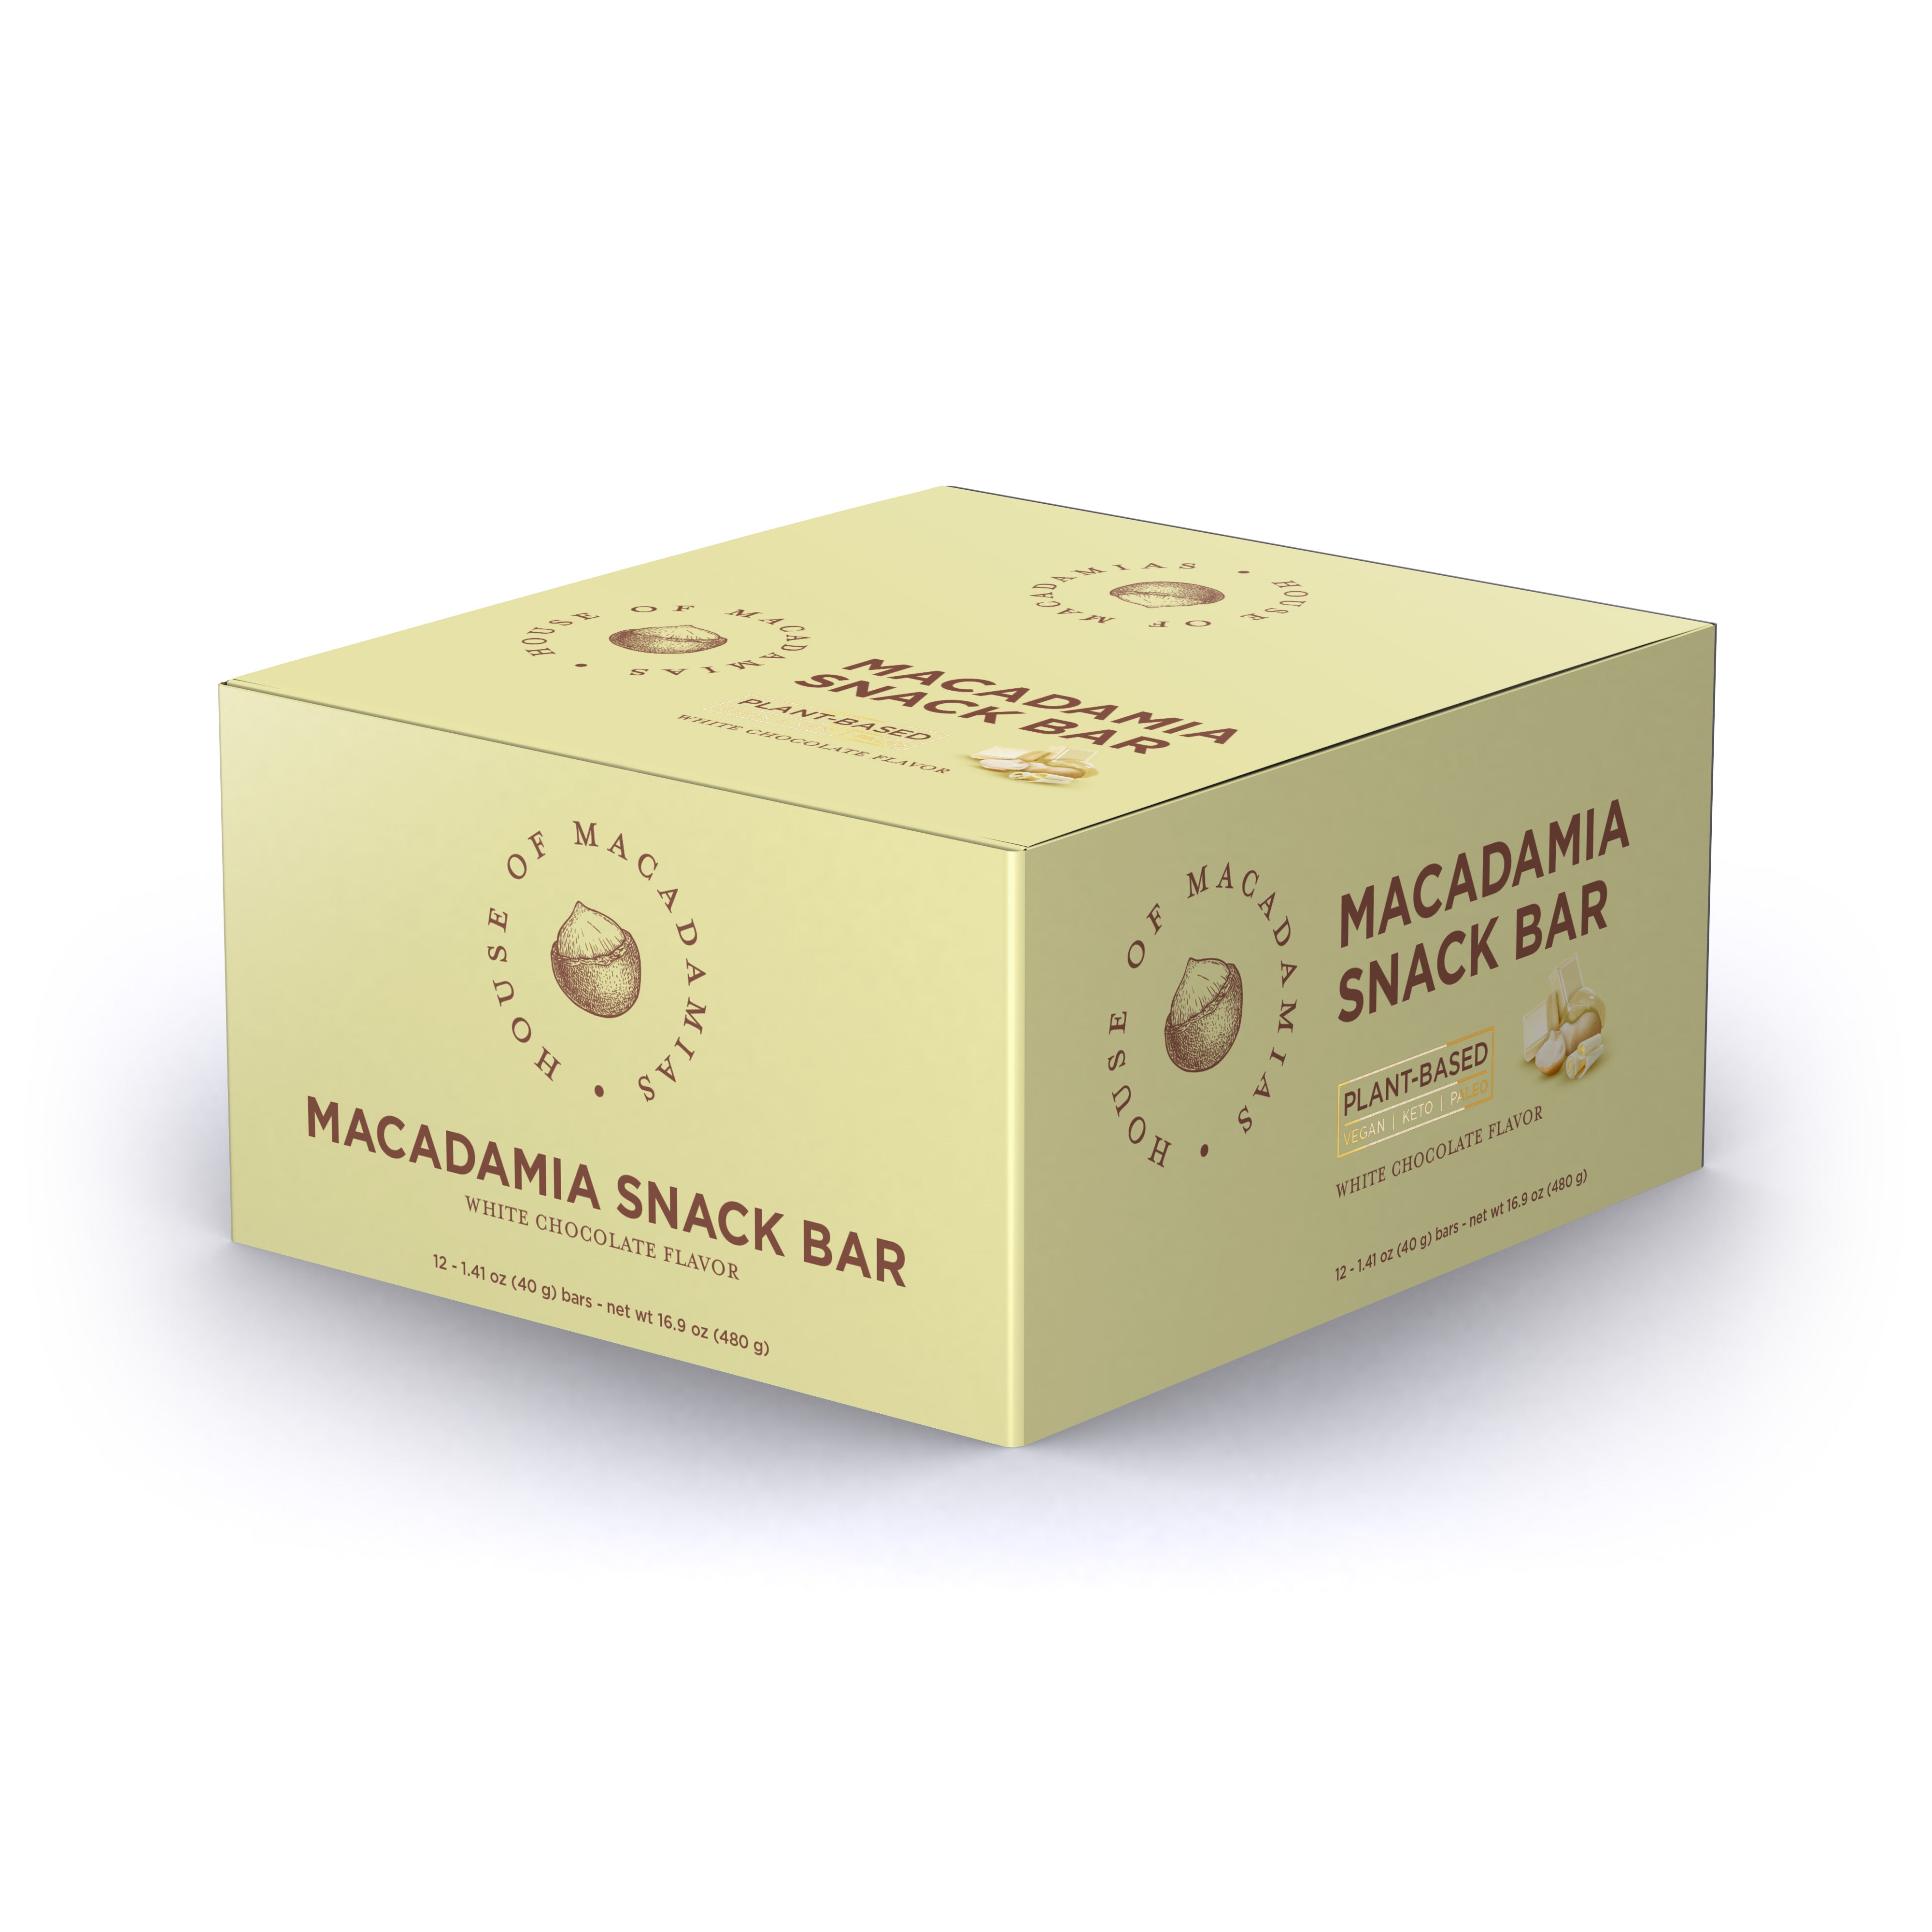 White Chocolate Macadamia Snack Bar (12 Bars) - House of Macadamias - midnight snack